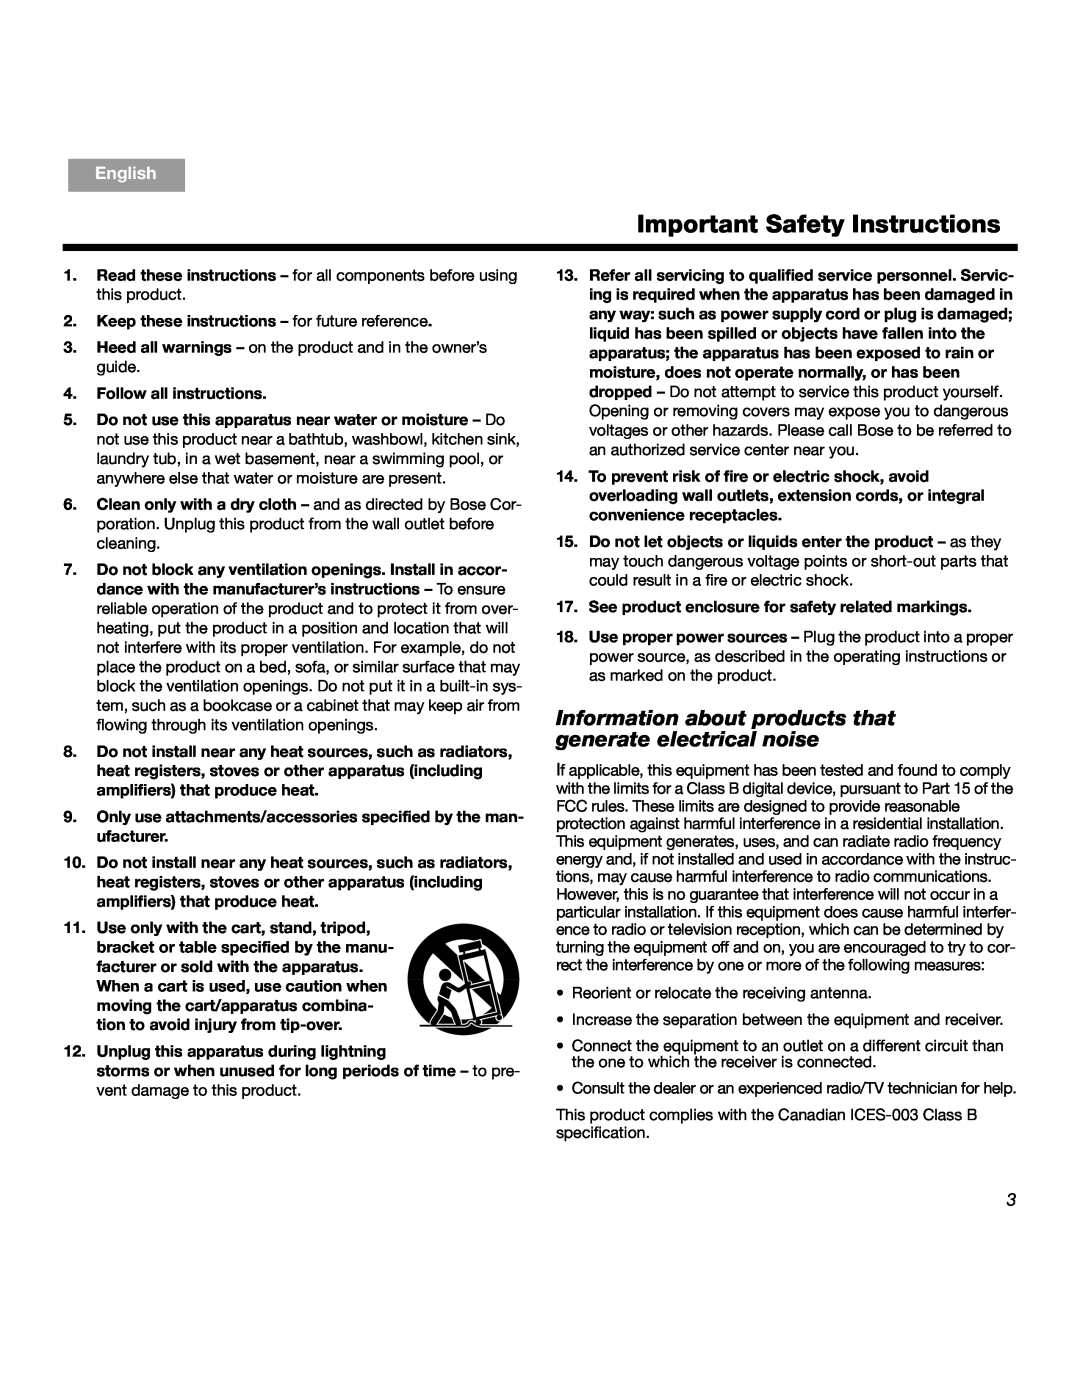 Bose SOUNDDOCKTM Important Safety Instructions, English, Dansk, Deutsch, Español, Français, Italiano, Nederlands, Svenska 